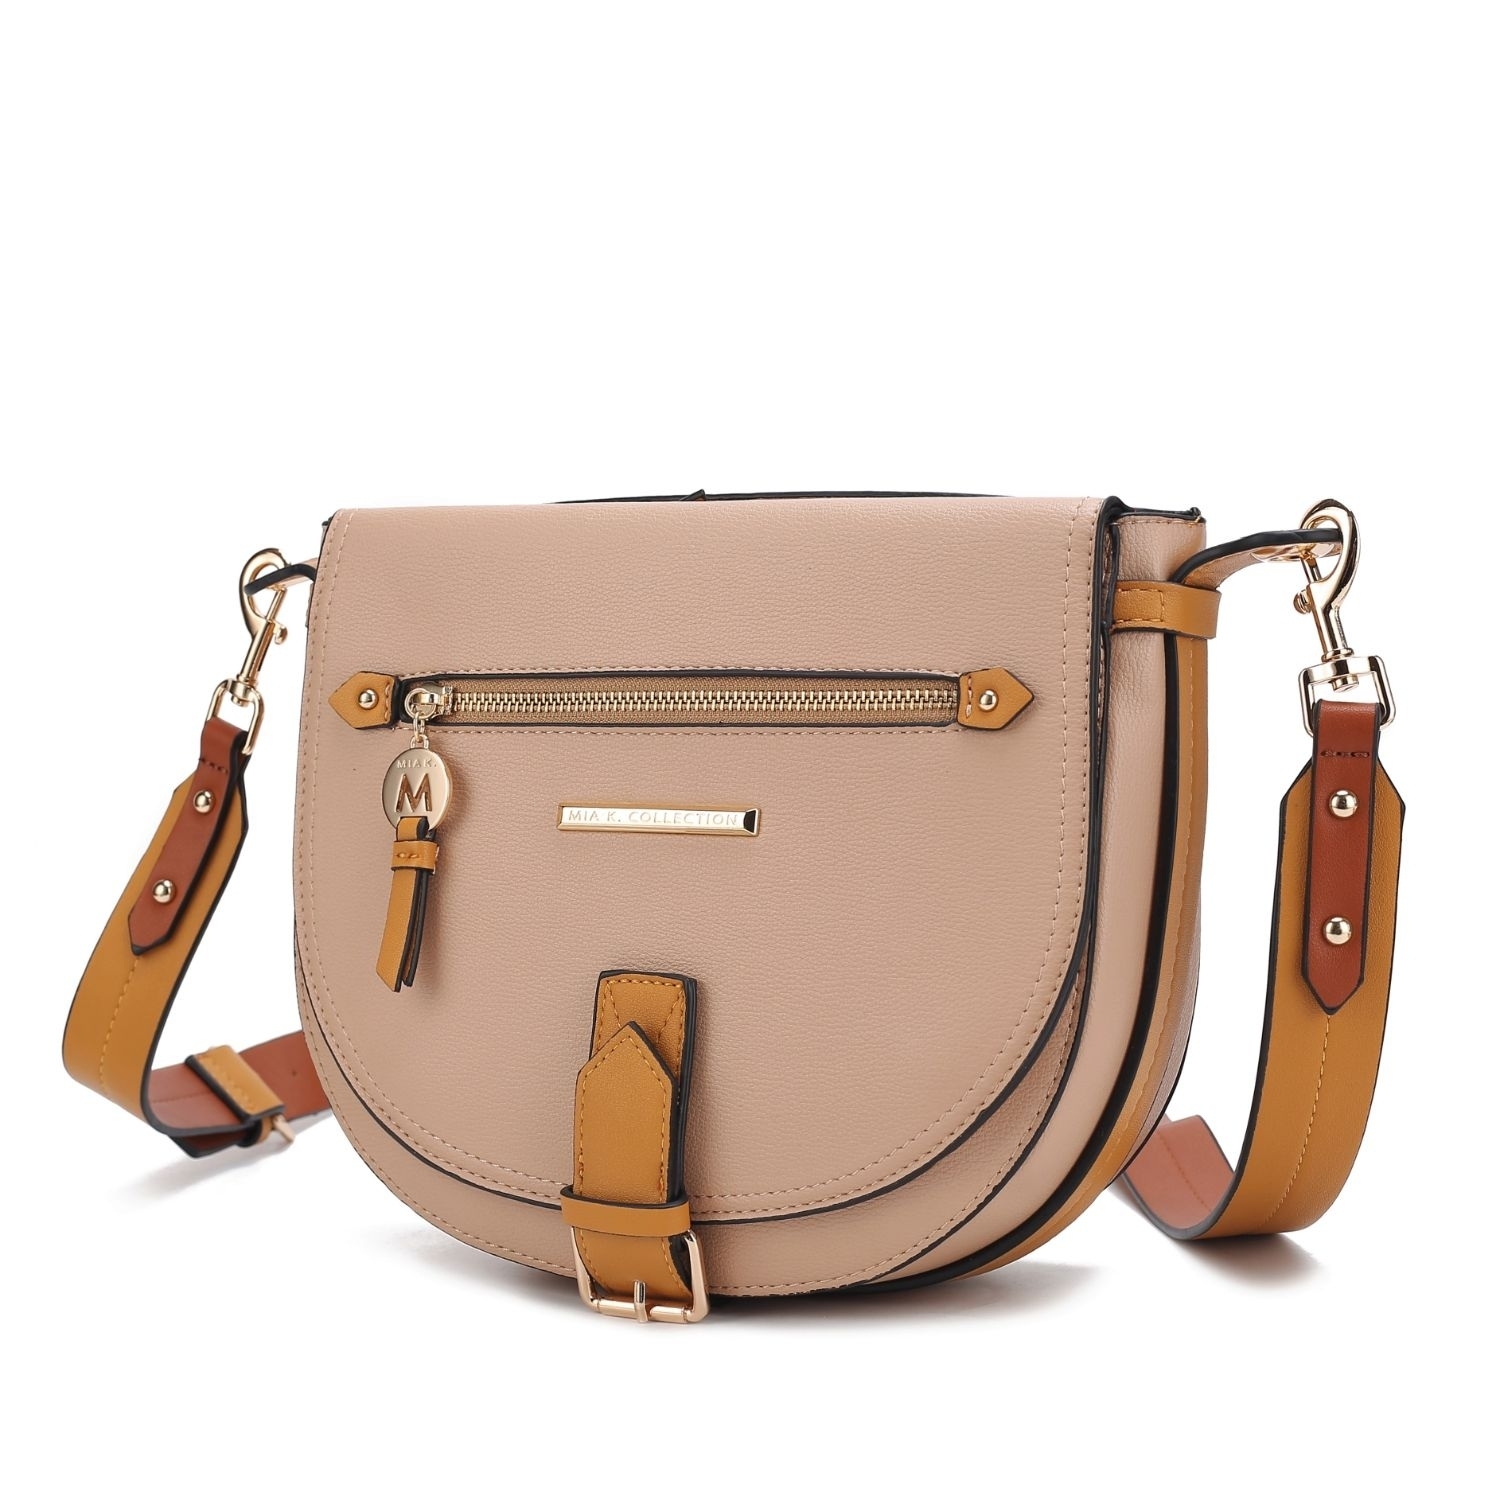 MKF Collection Drew Vegan Leather Color Block Womens Shoulder Handbag By Mia K - Cognac